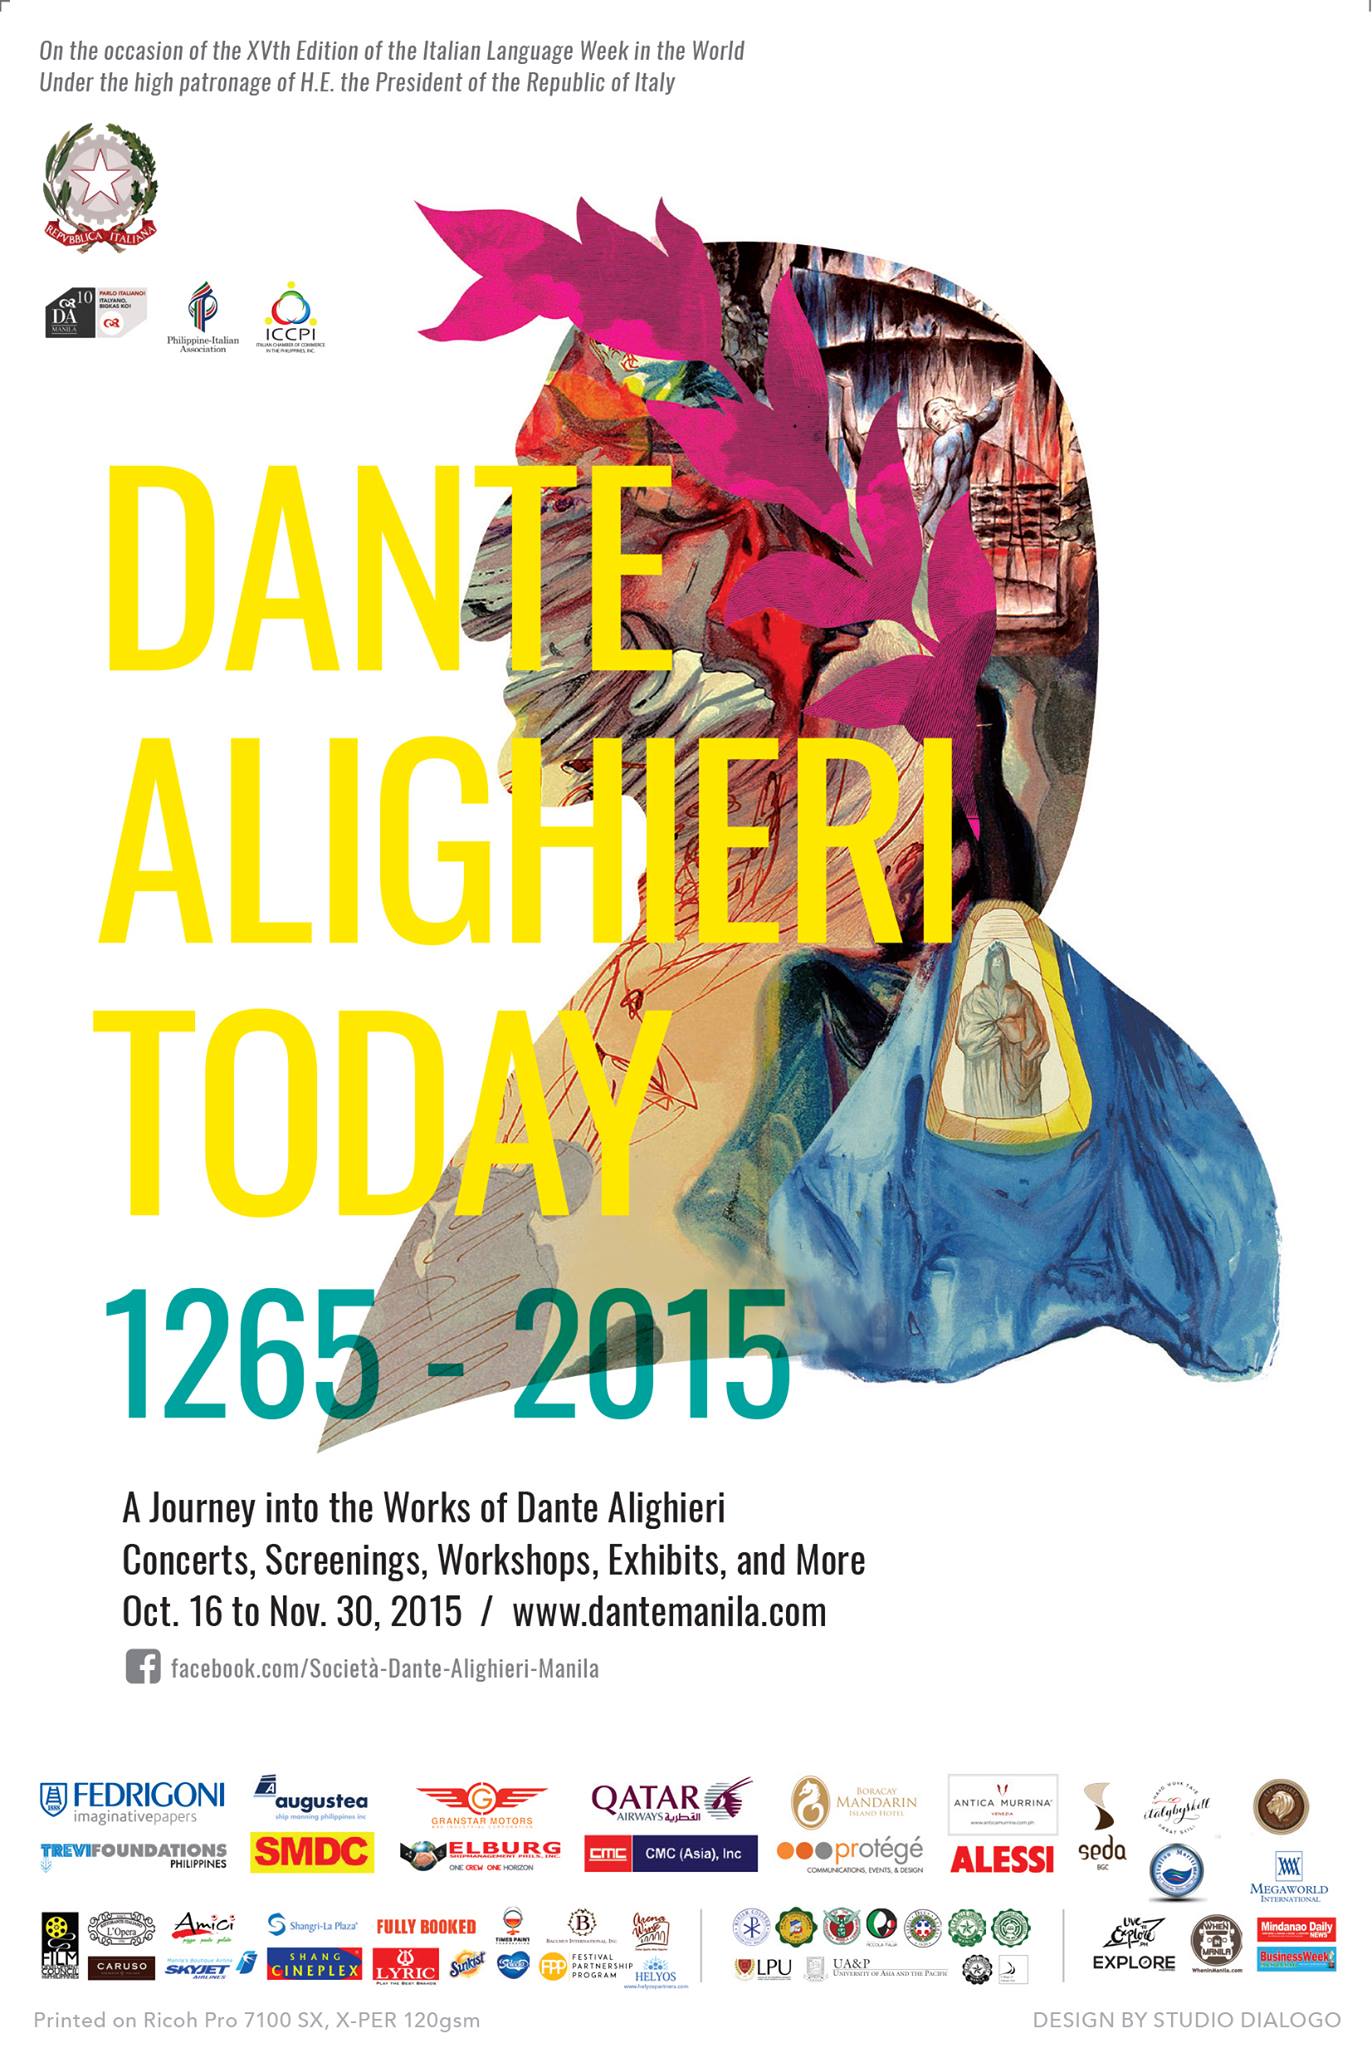 151016_dante-alighieri-today